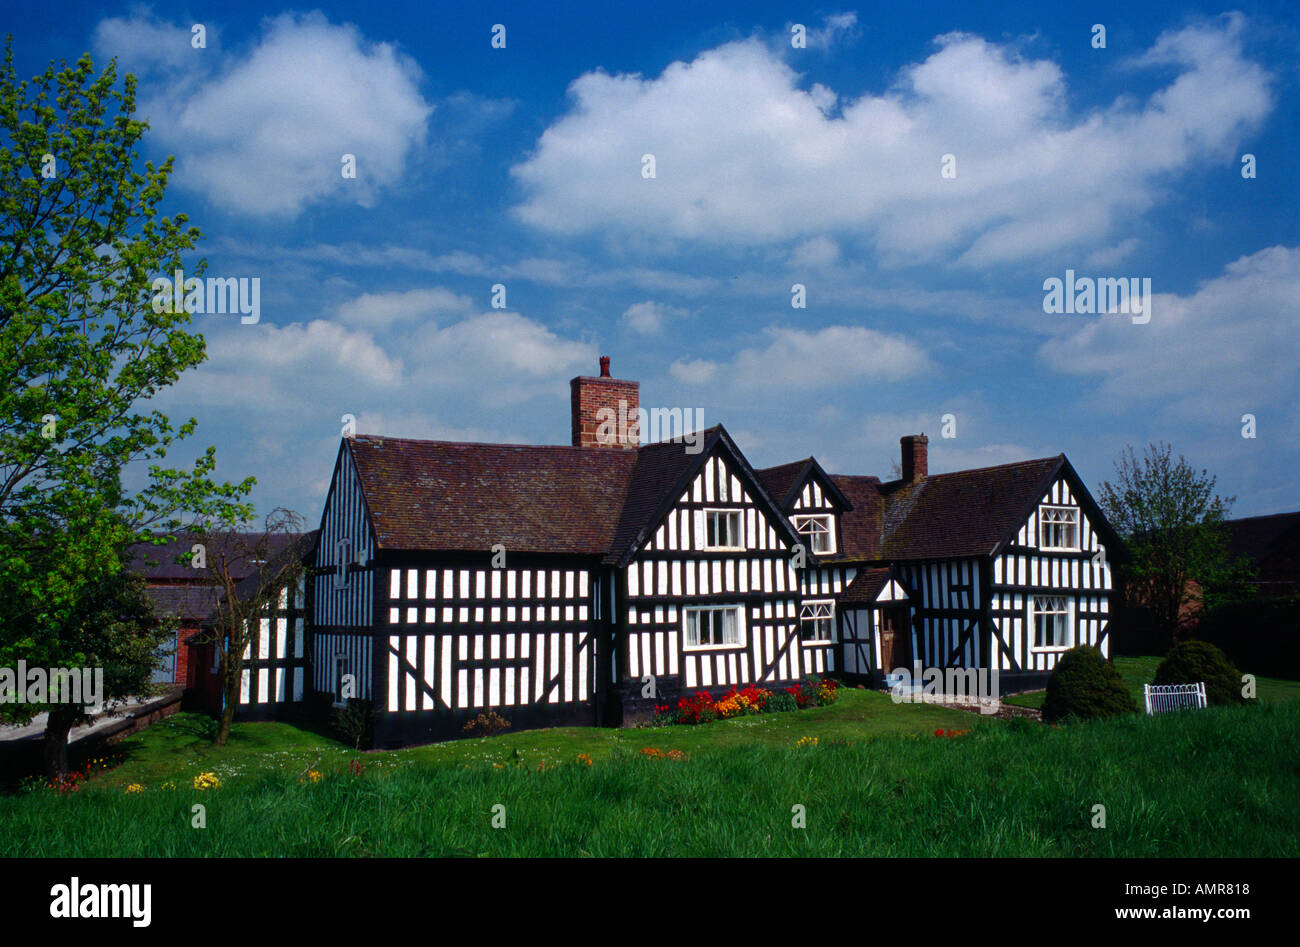 Black and White 15th Century English House Shropshire Salop England UK United Kingdom GB Great Britain British Isles Europe Stock Photo